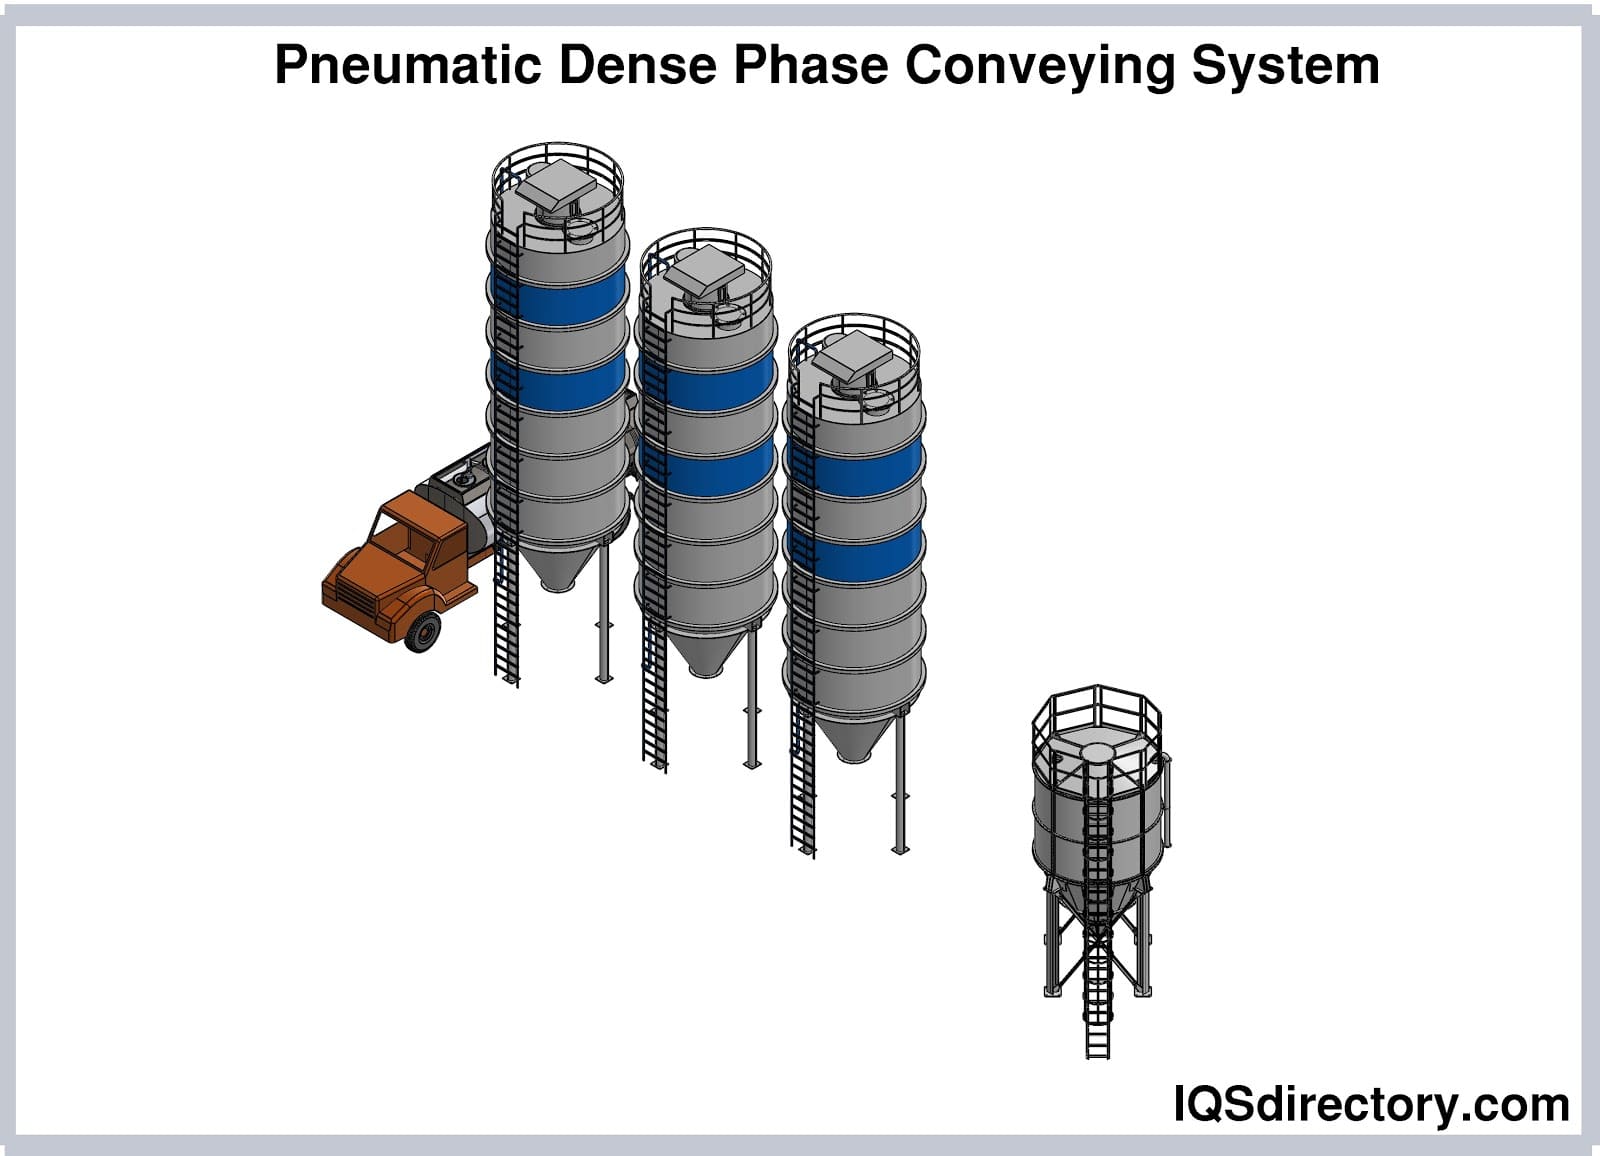 Pneumatic Dense Phase Conveying System